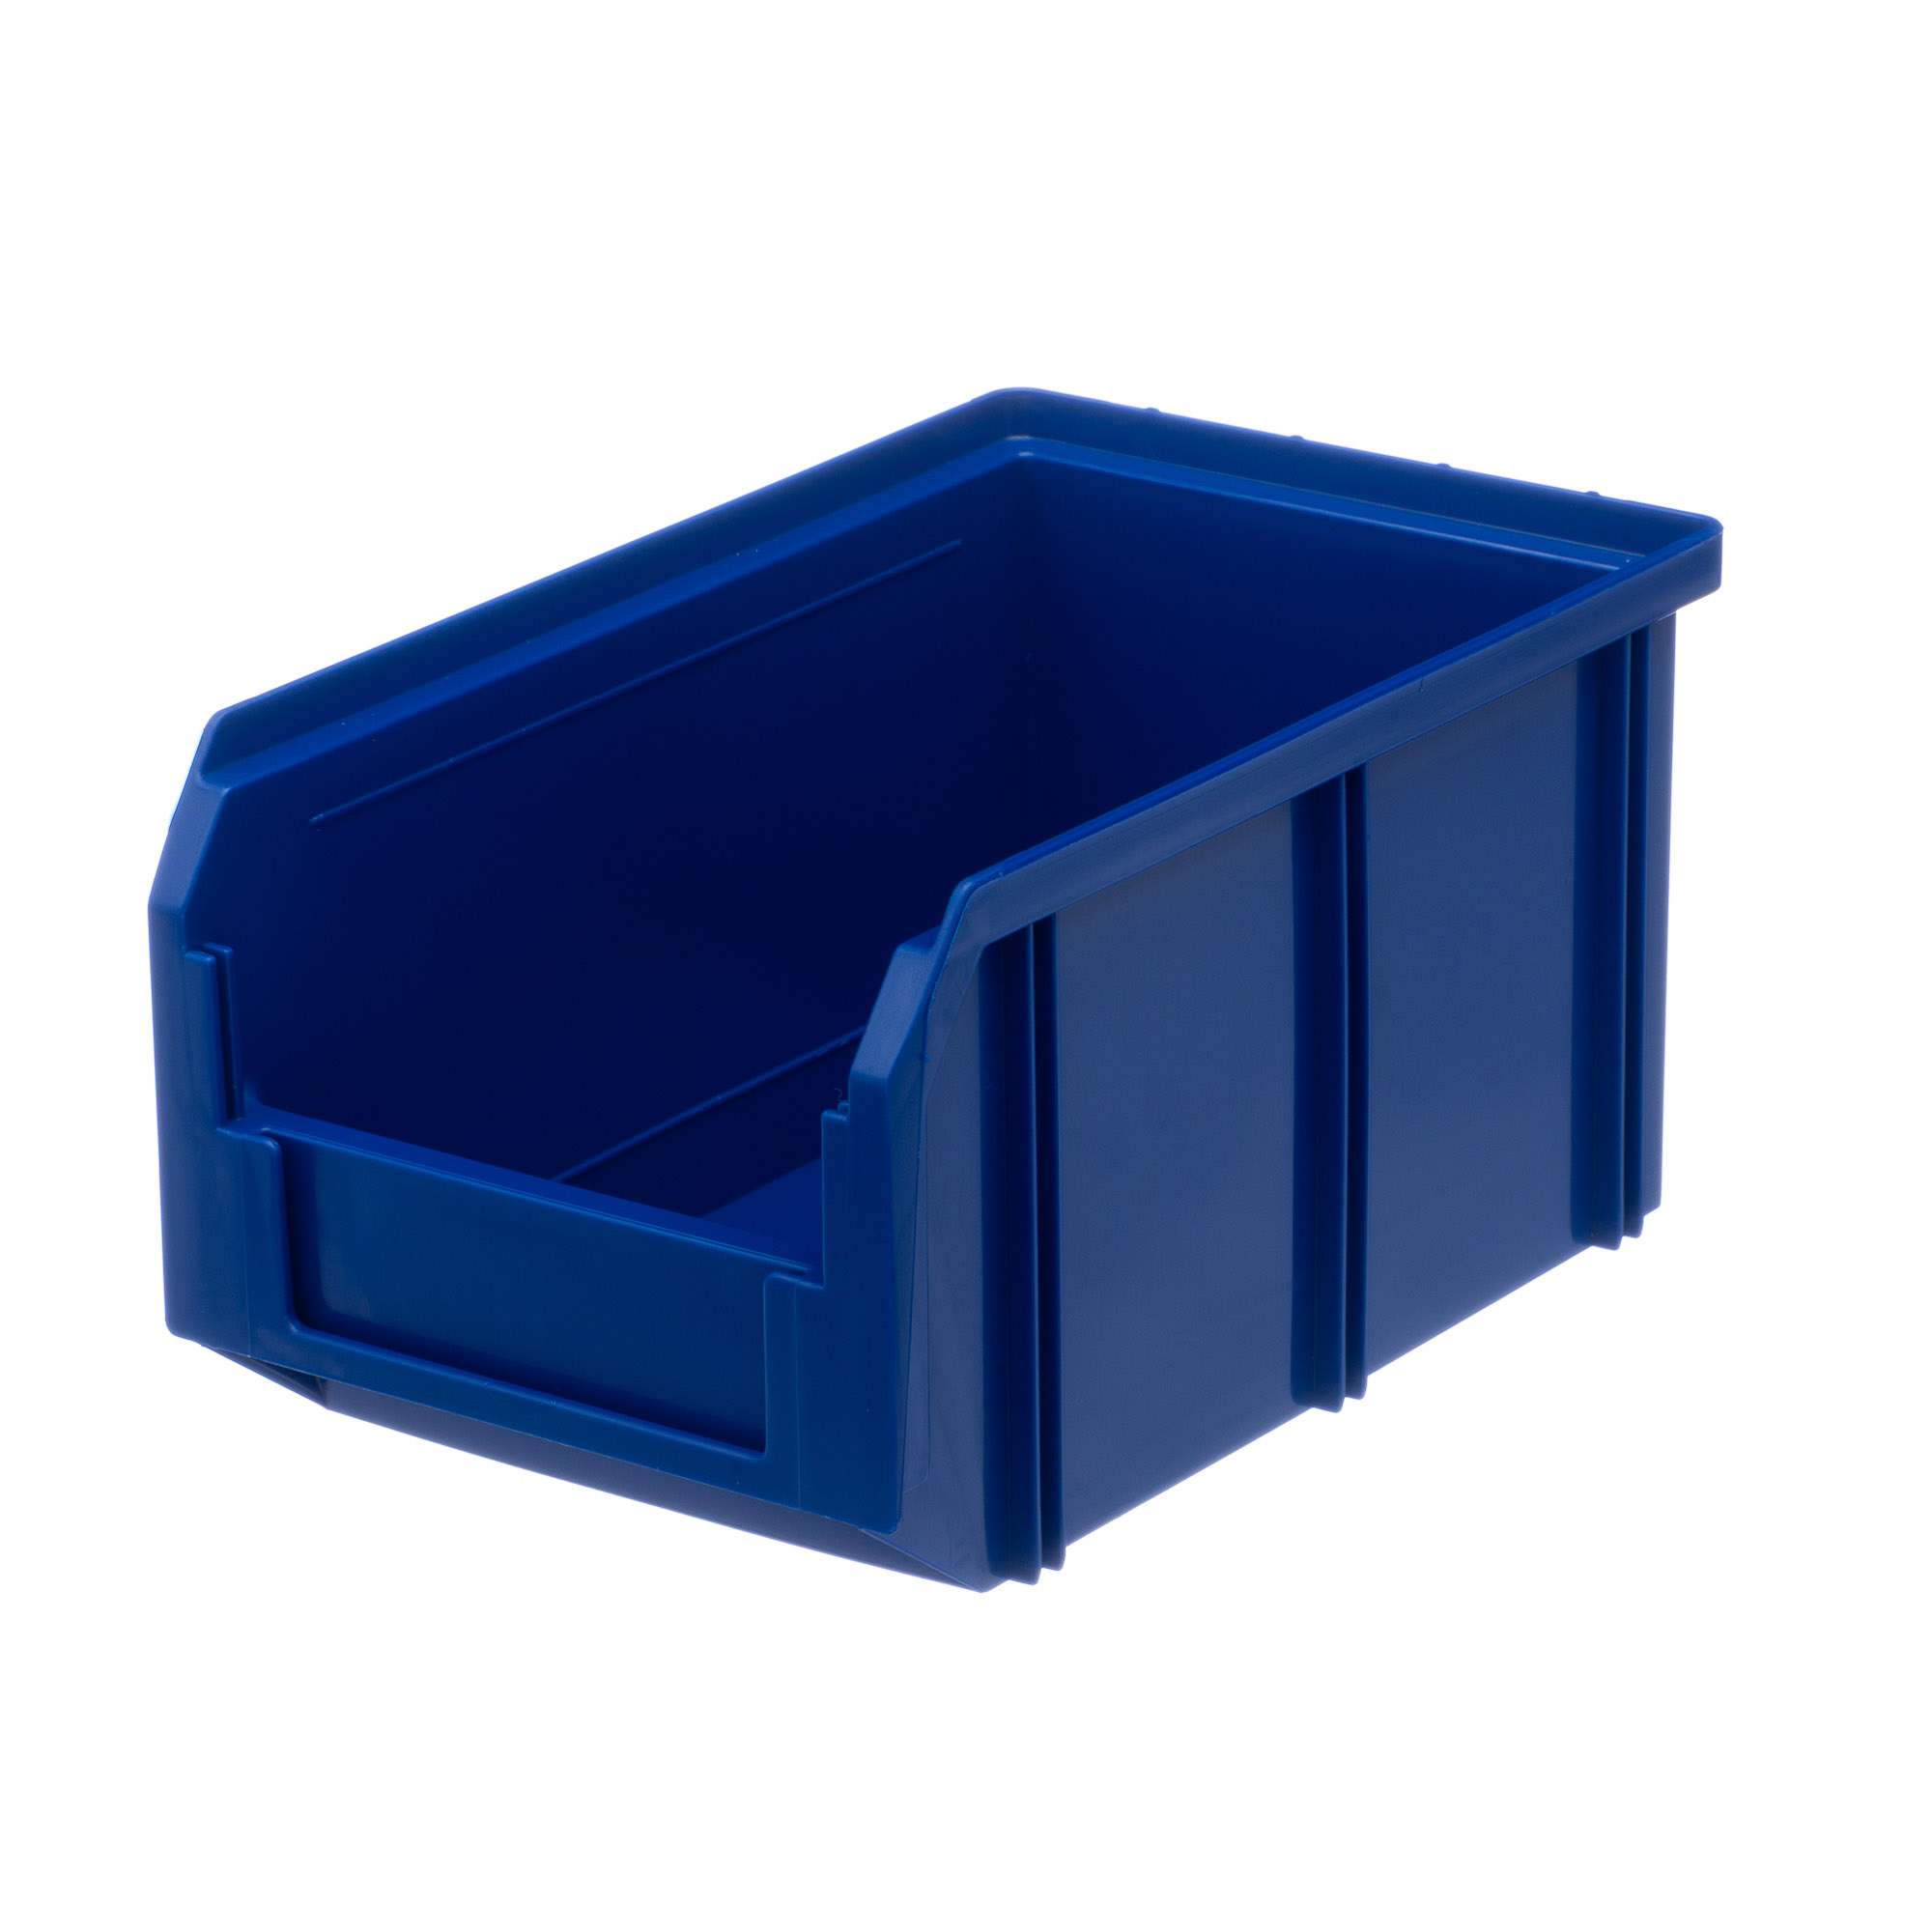 Пластиковый ящик Стелла-техник V-2-синий 234х149х120мм, 3,8 литра патрон е27 пластиковый с подвесом 1м синий rev